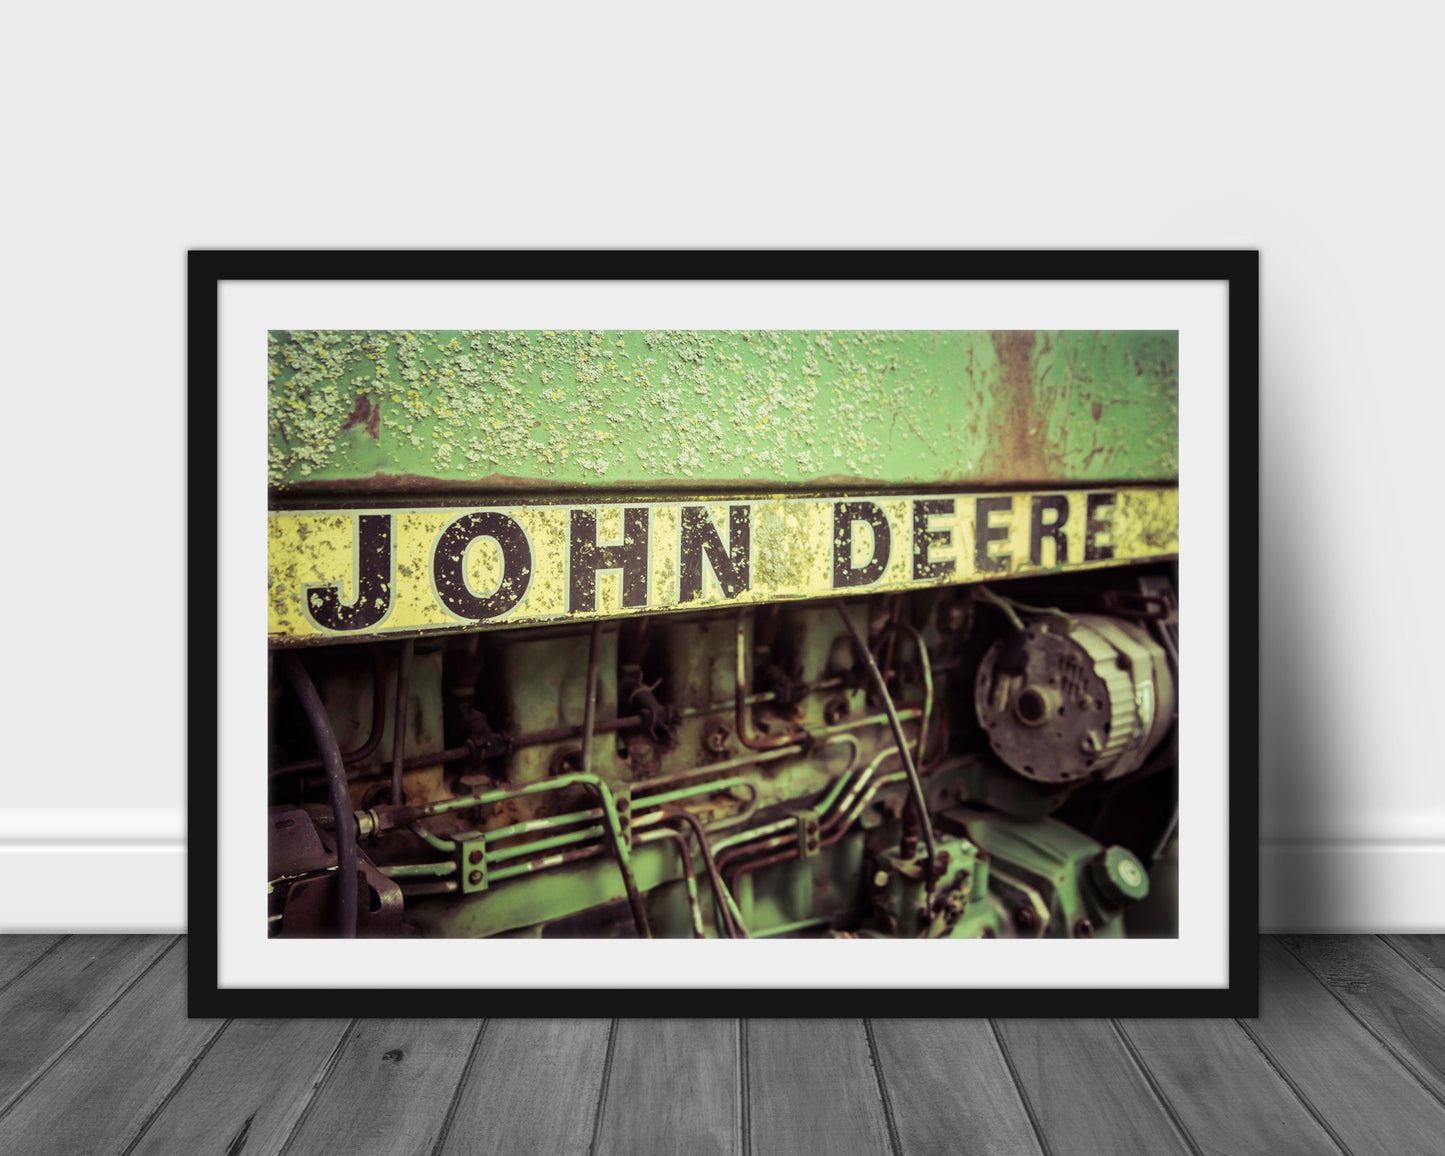 John Deere Tractor - Tractor Photography, Americana Photography, Farmhouse Photography, Metal Wall Art, Office Wall Art